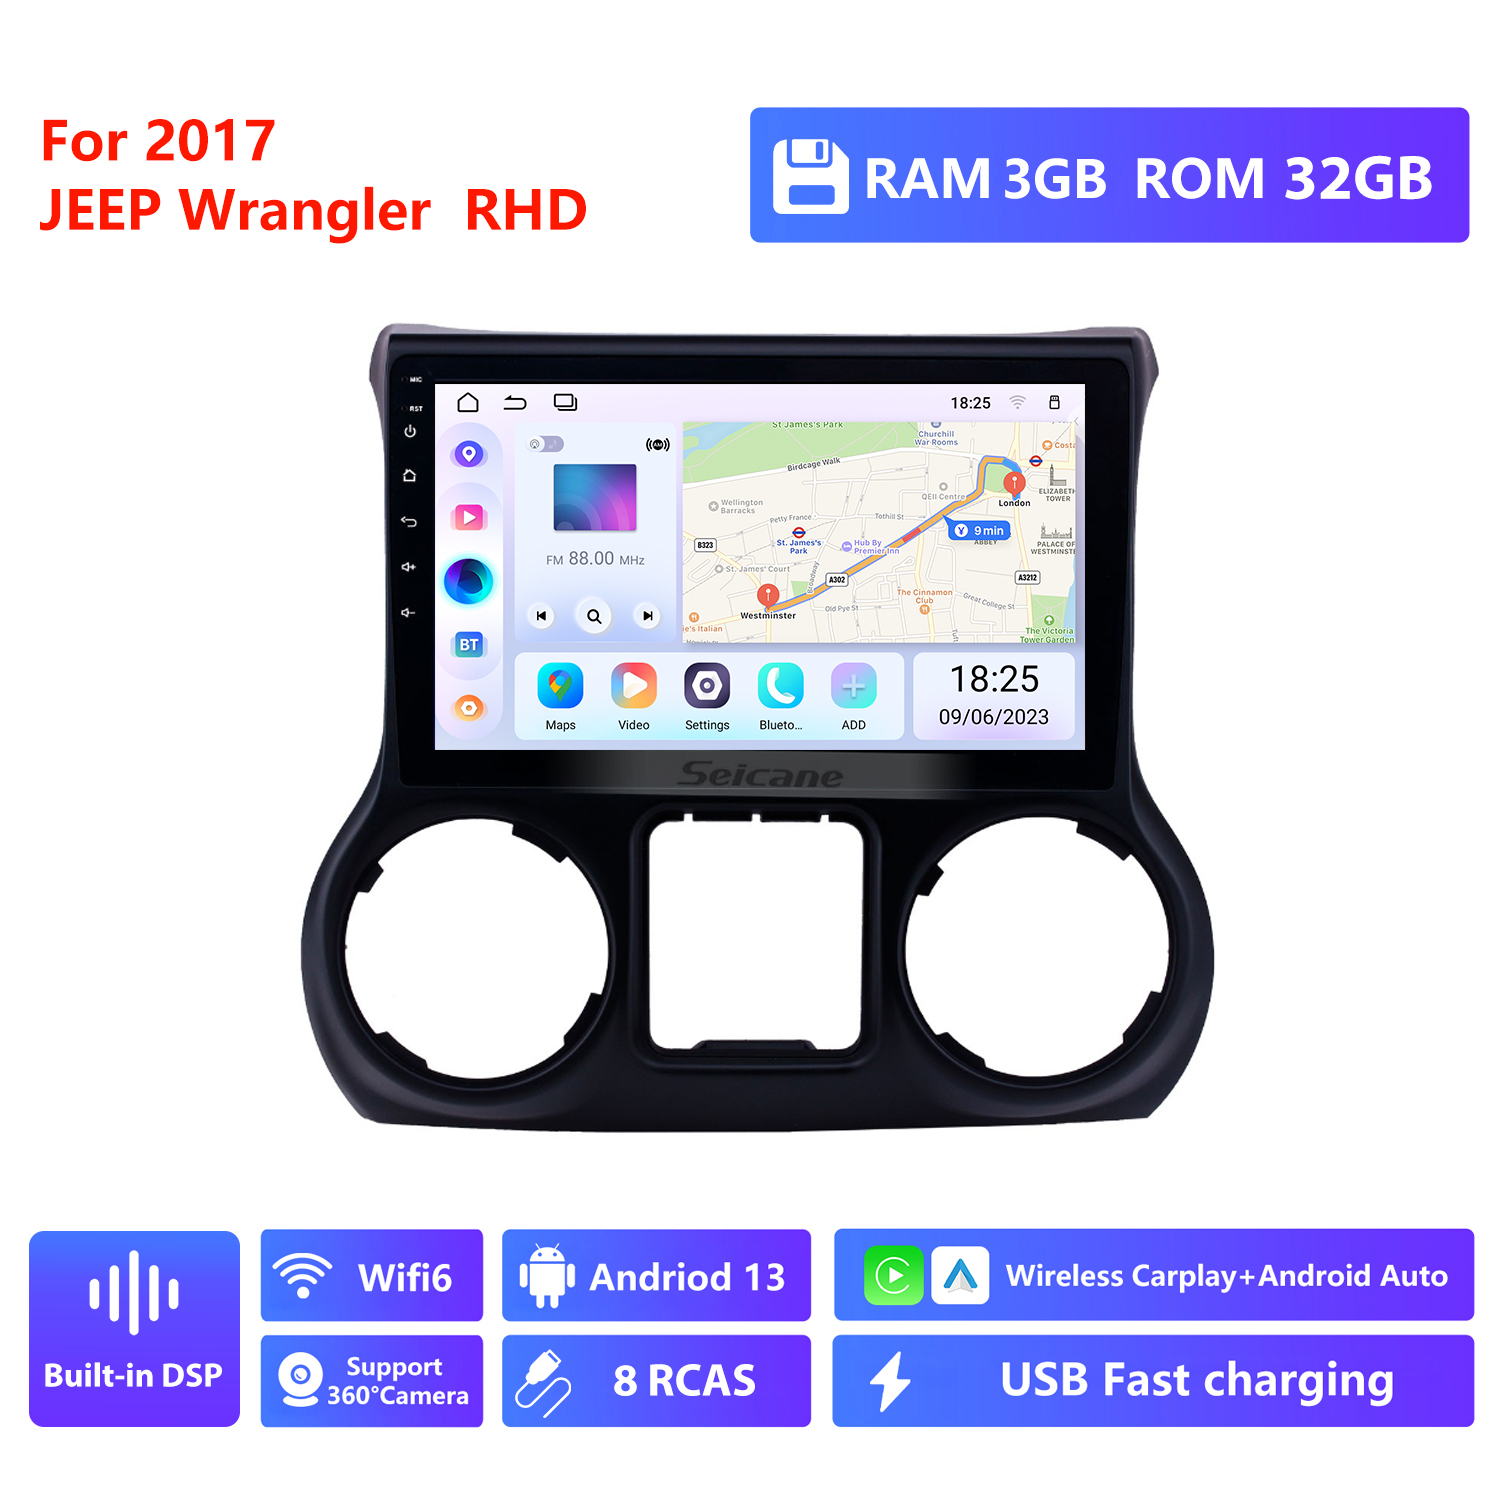 RAM 3G,ROM 32G,2017,RHD